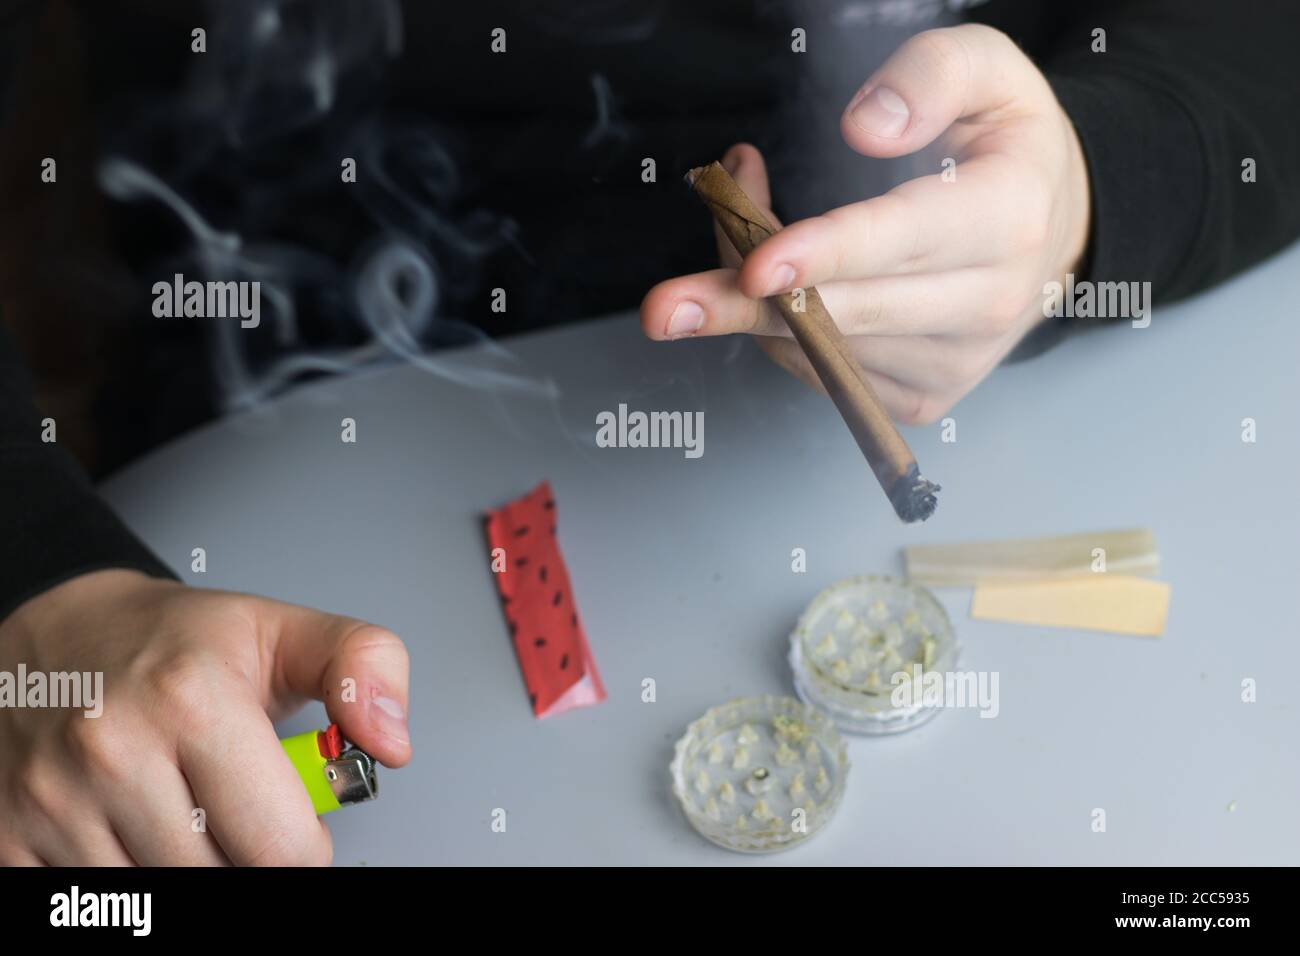 Smoking cannabis in blunt paper, marijuana recreational use Stock Photo